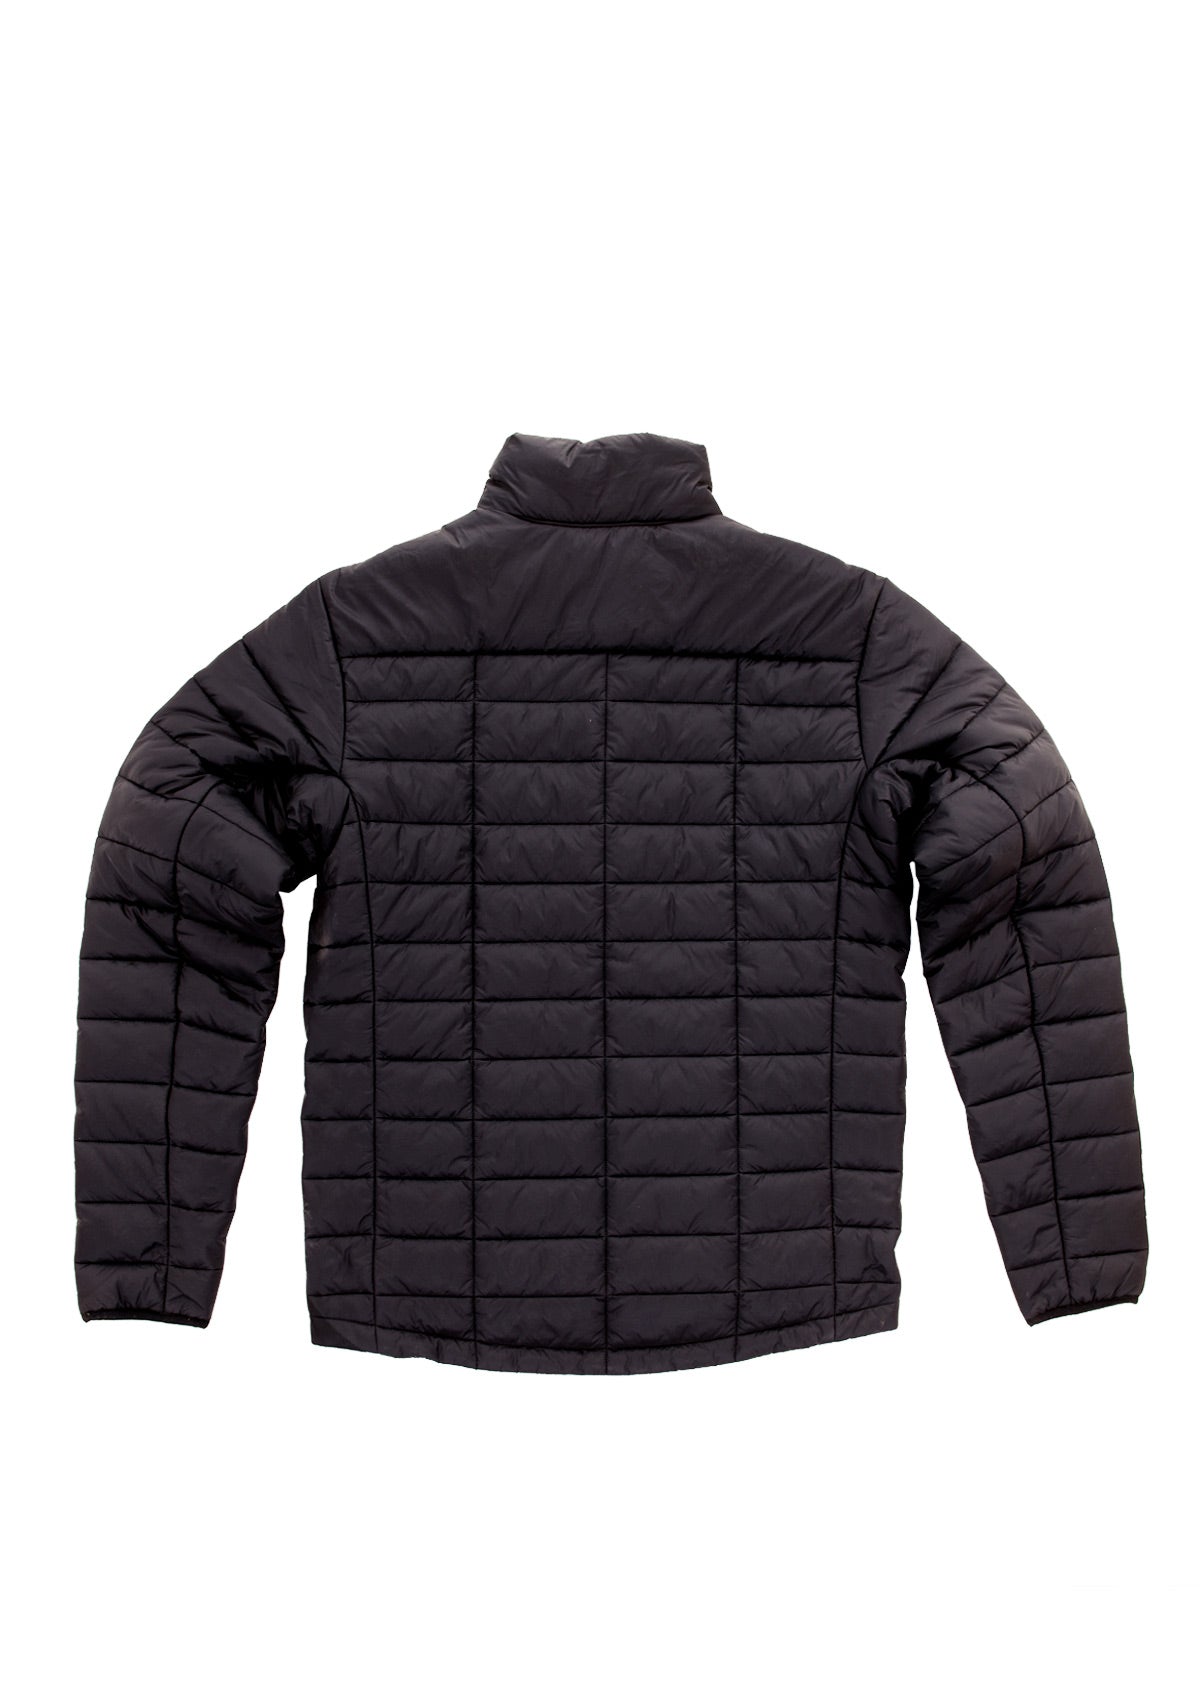 needessentials insulator jacket black layer jacket non branded 